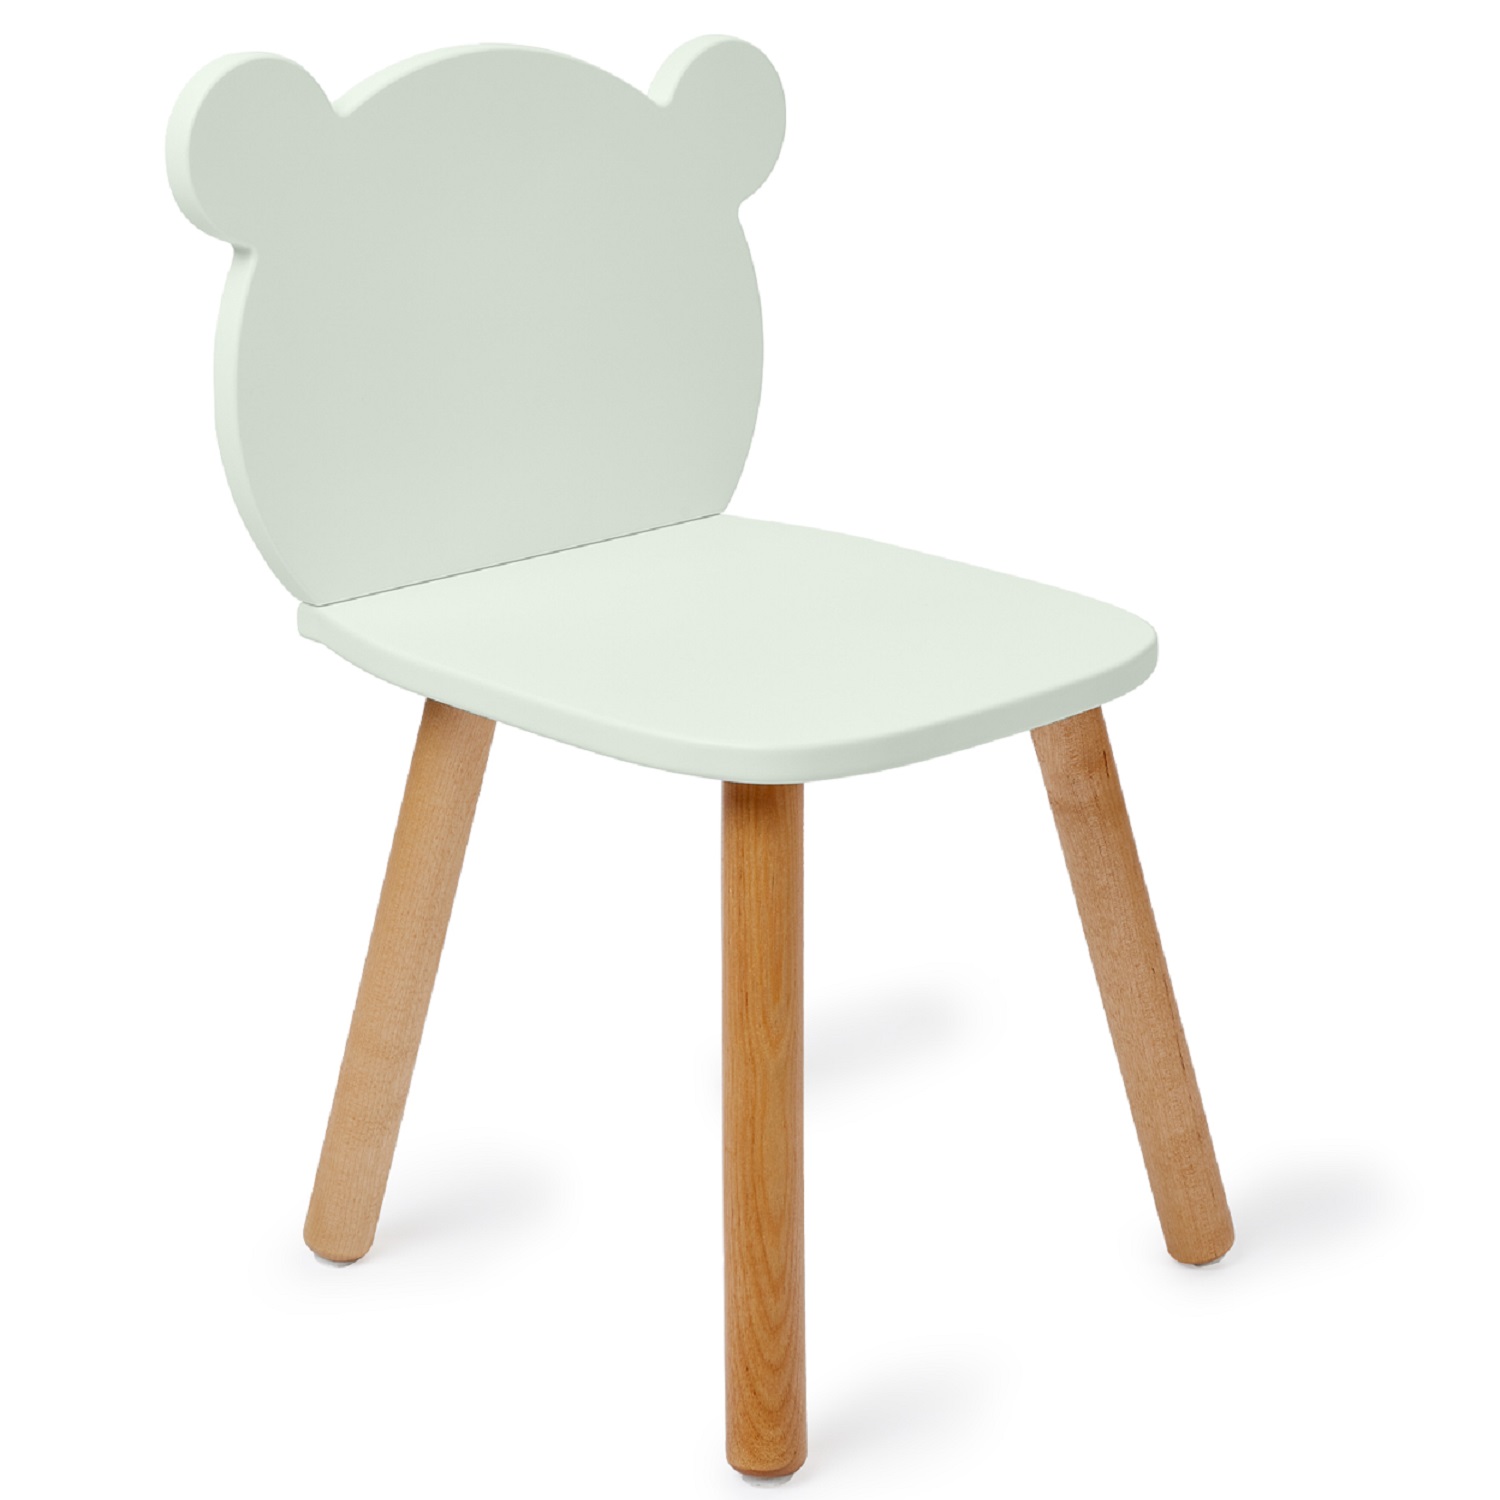 Стул детский Happy Baby Misha chair шалфей - фото 2